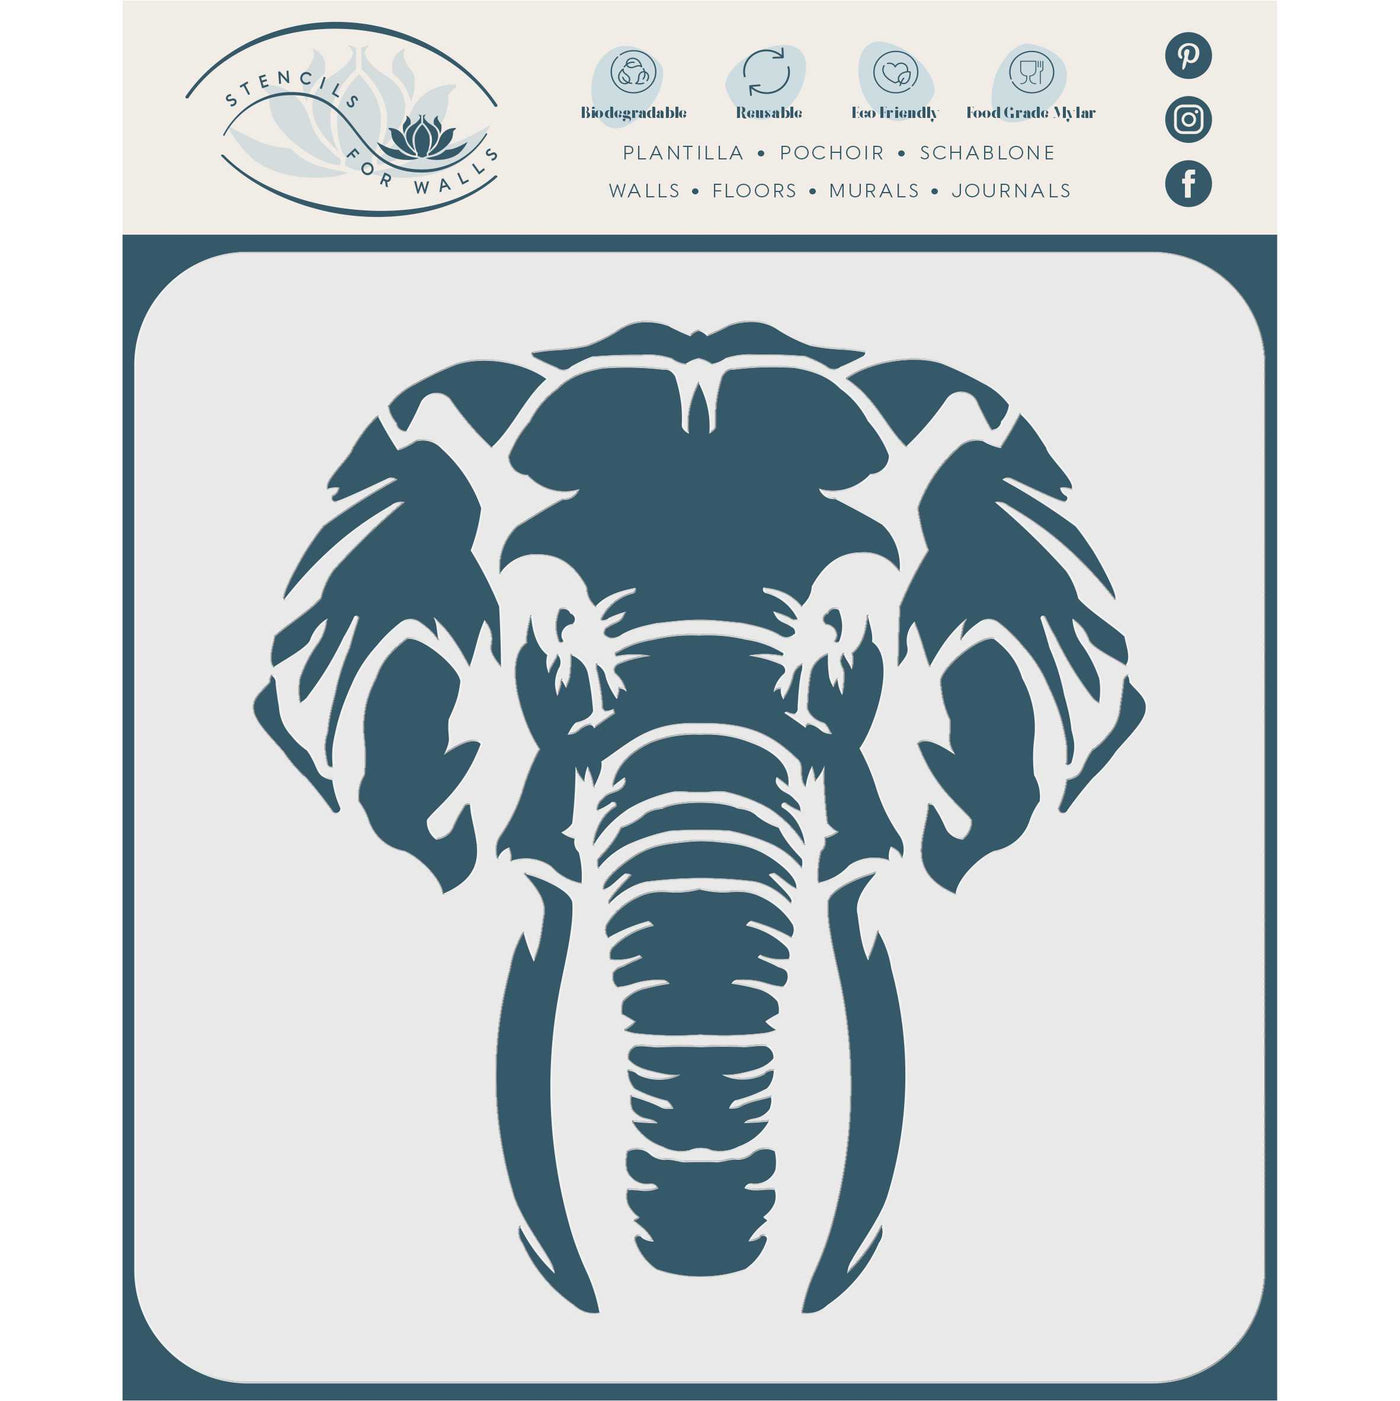 Elephant Head Stencil - African Big Five Animal Wildlife